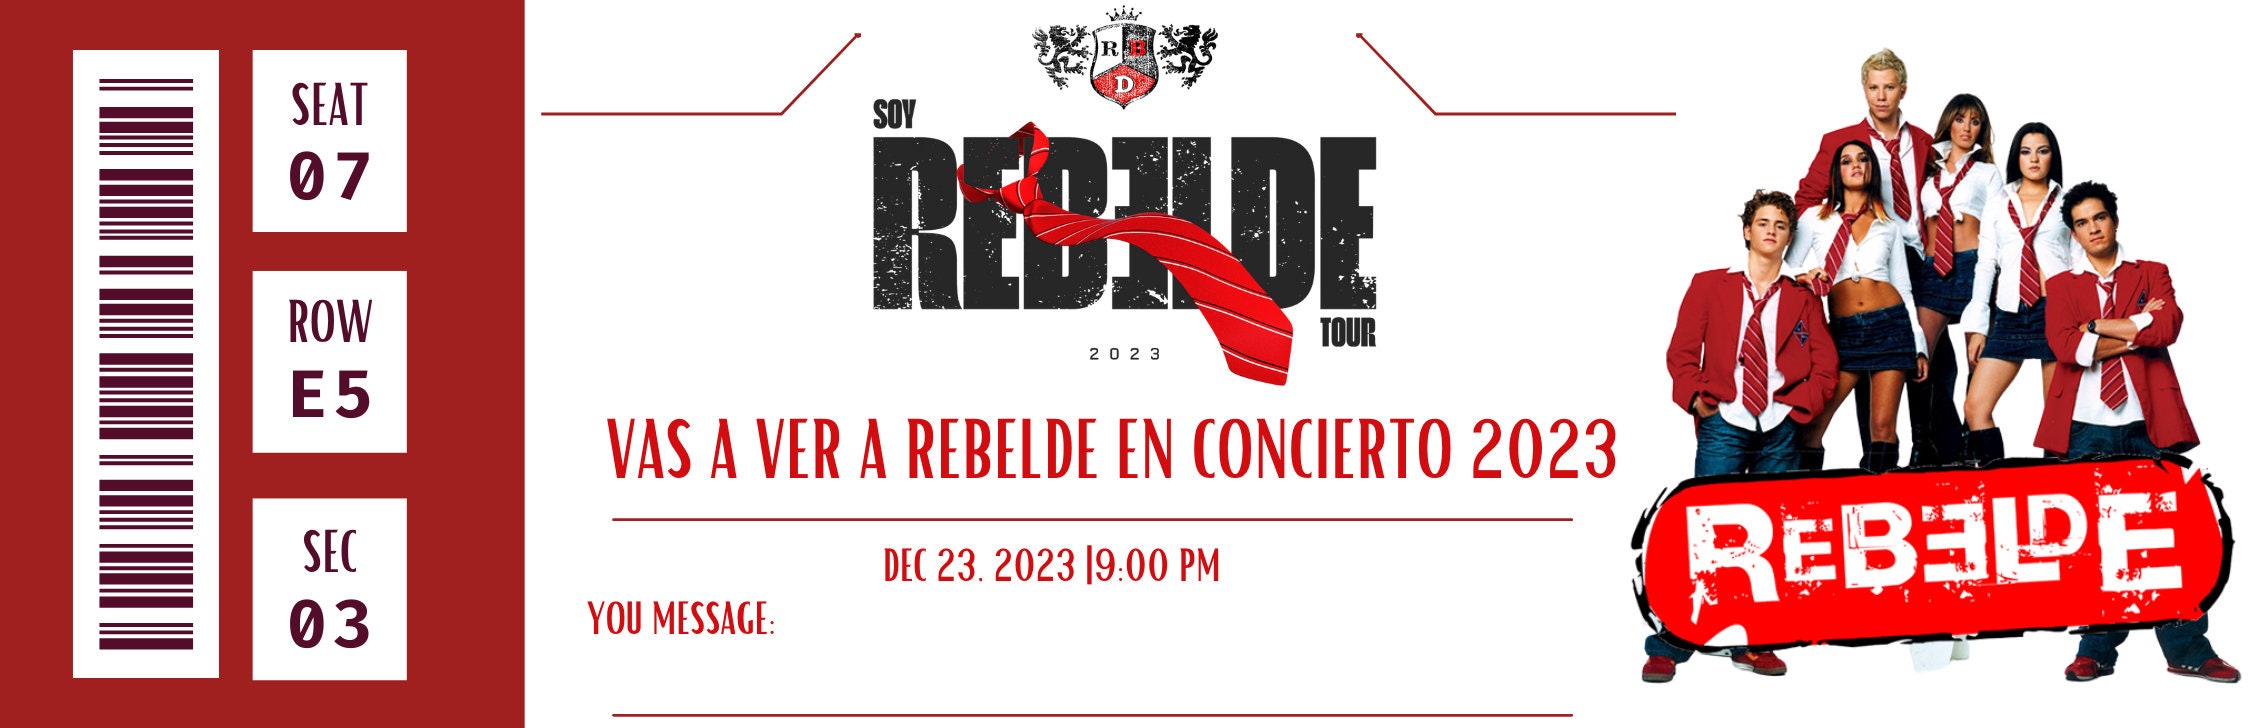 Rebelde Surprise Concert Ticket Personalized Ticket Boleto Sorpresa